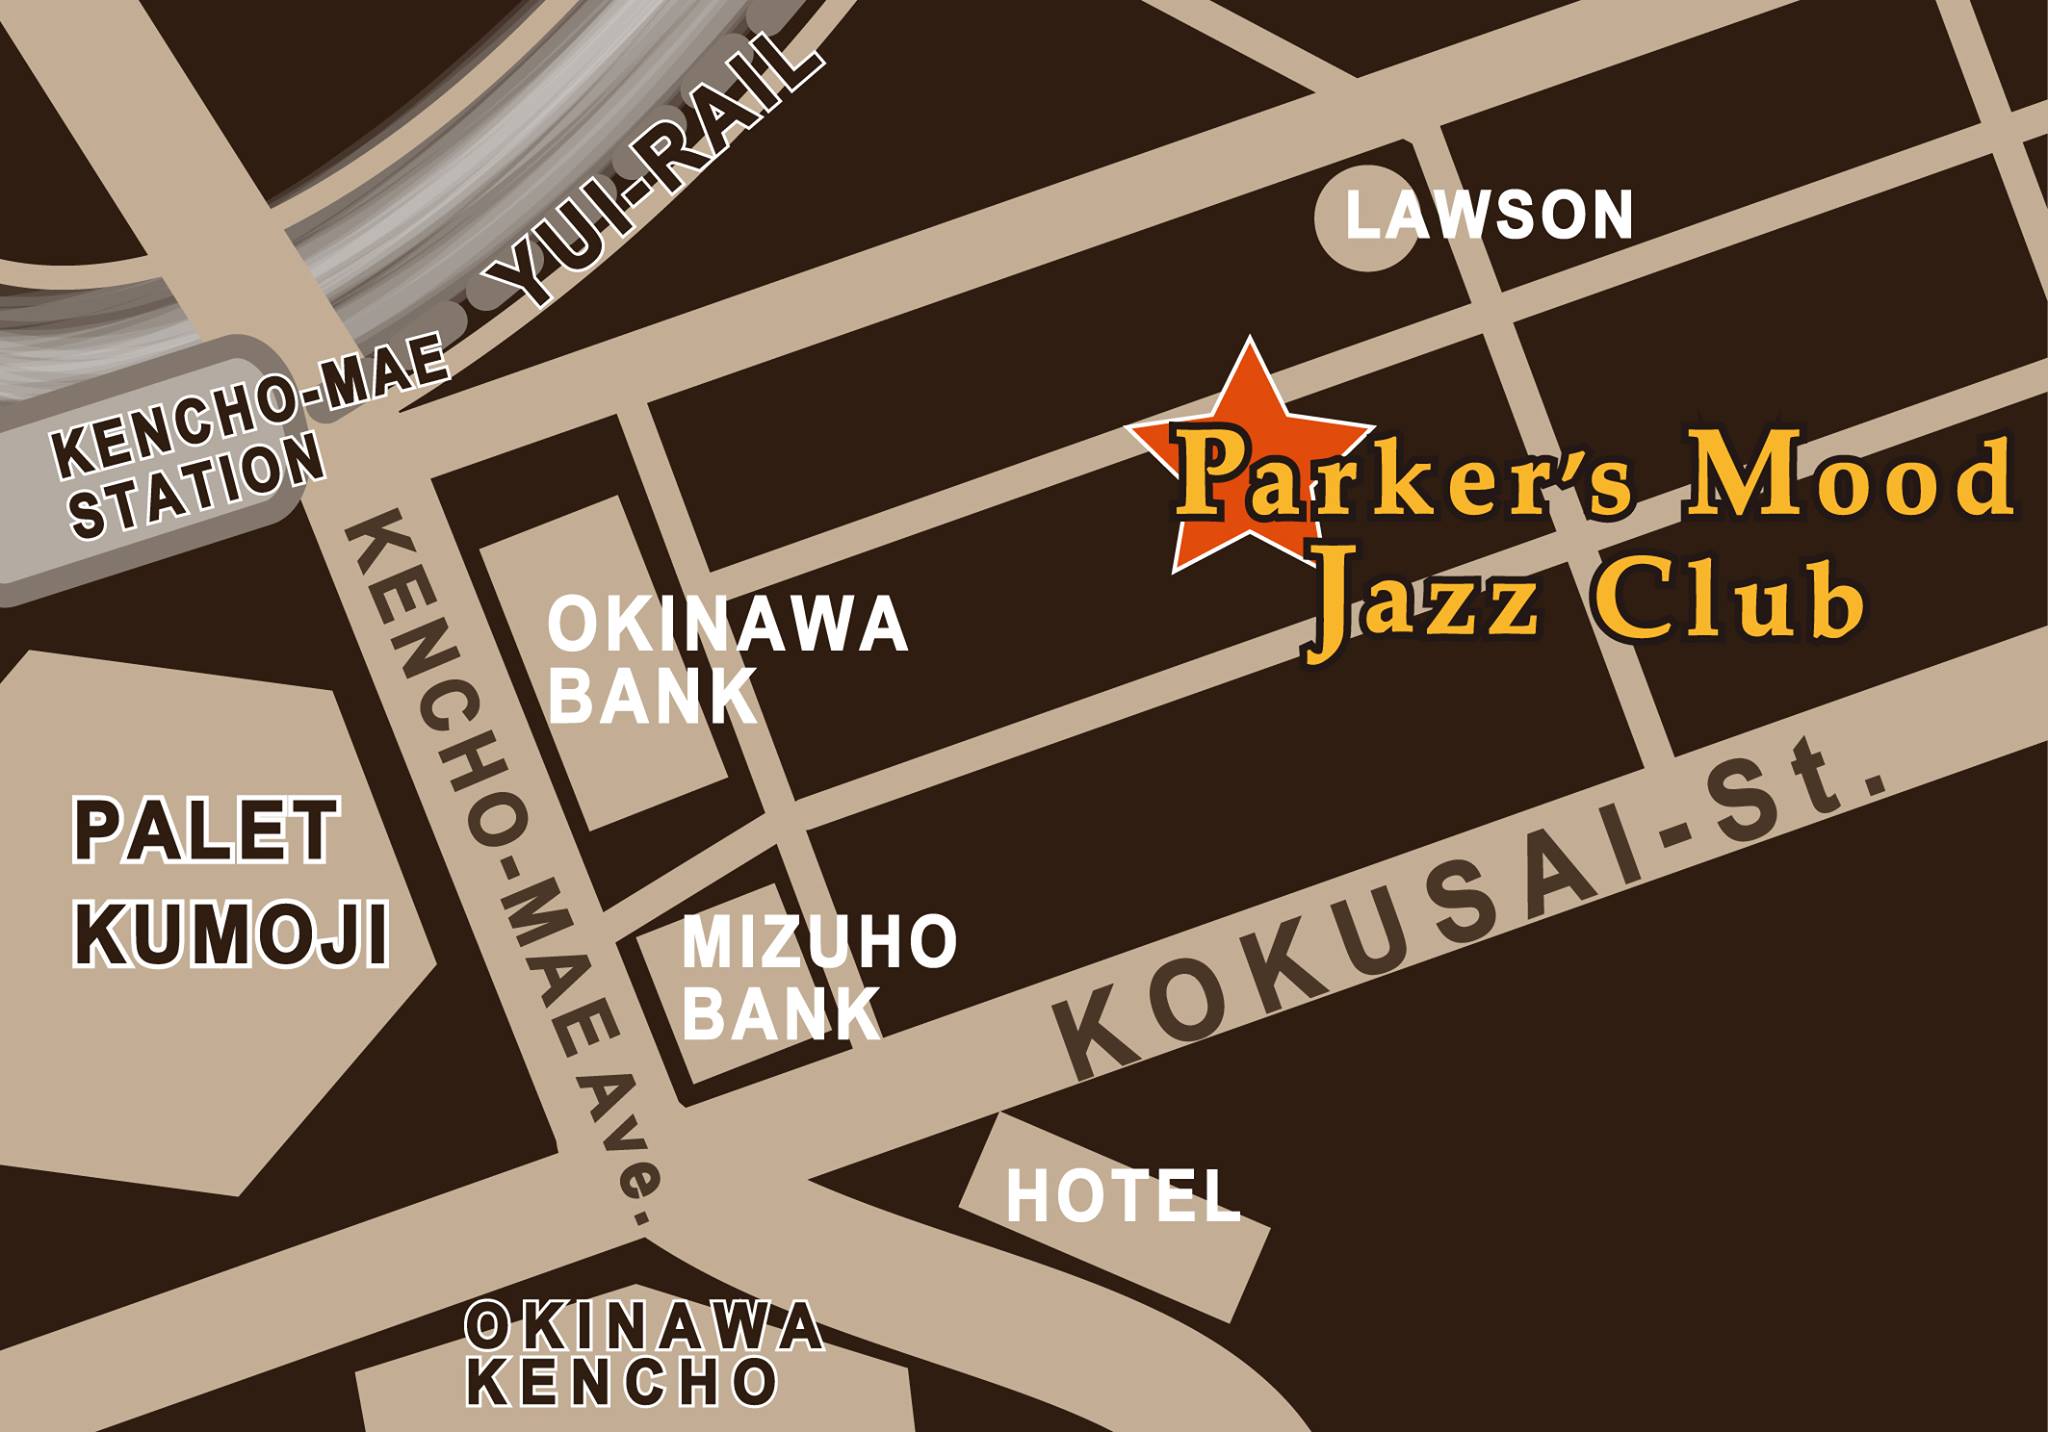 Parker's Mood Jazz Club 오키나와 나하 재즈